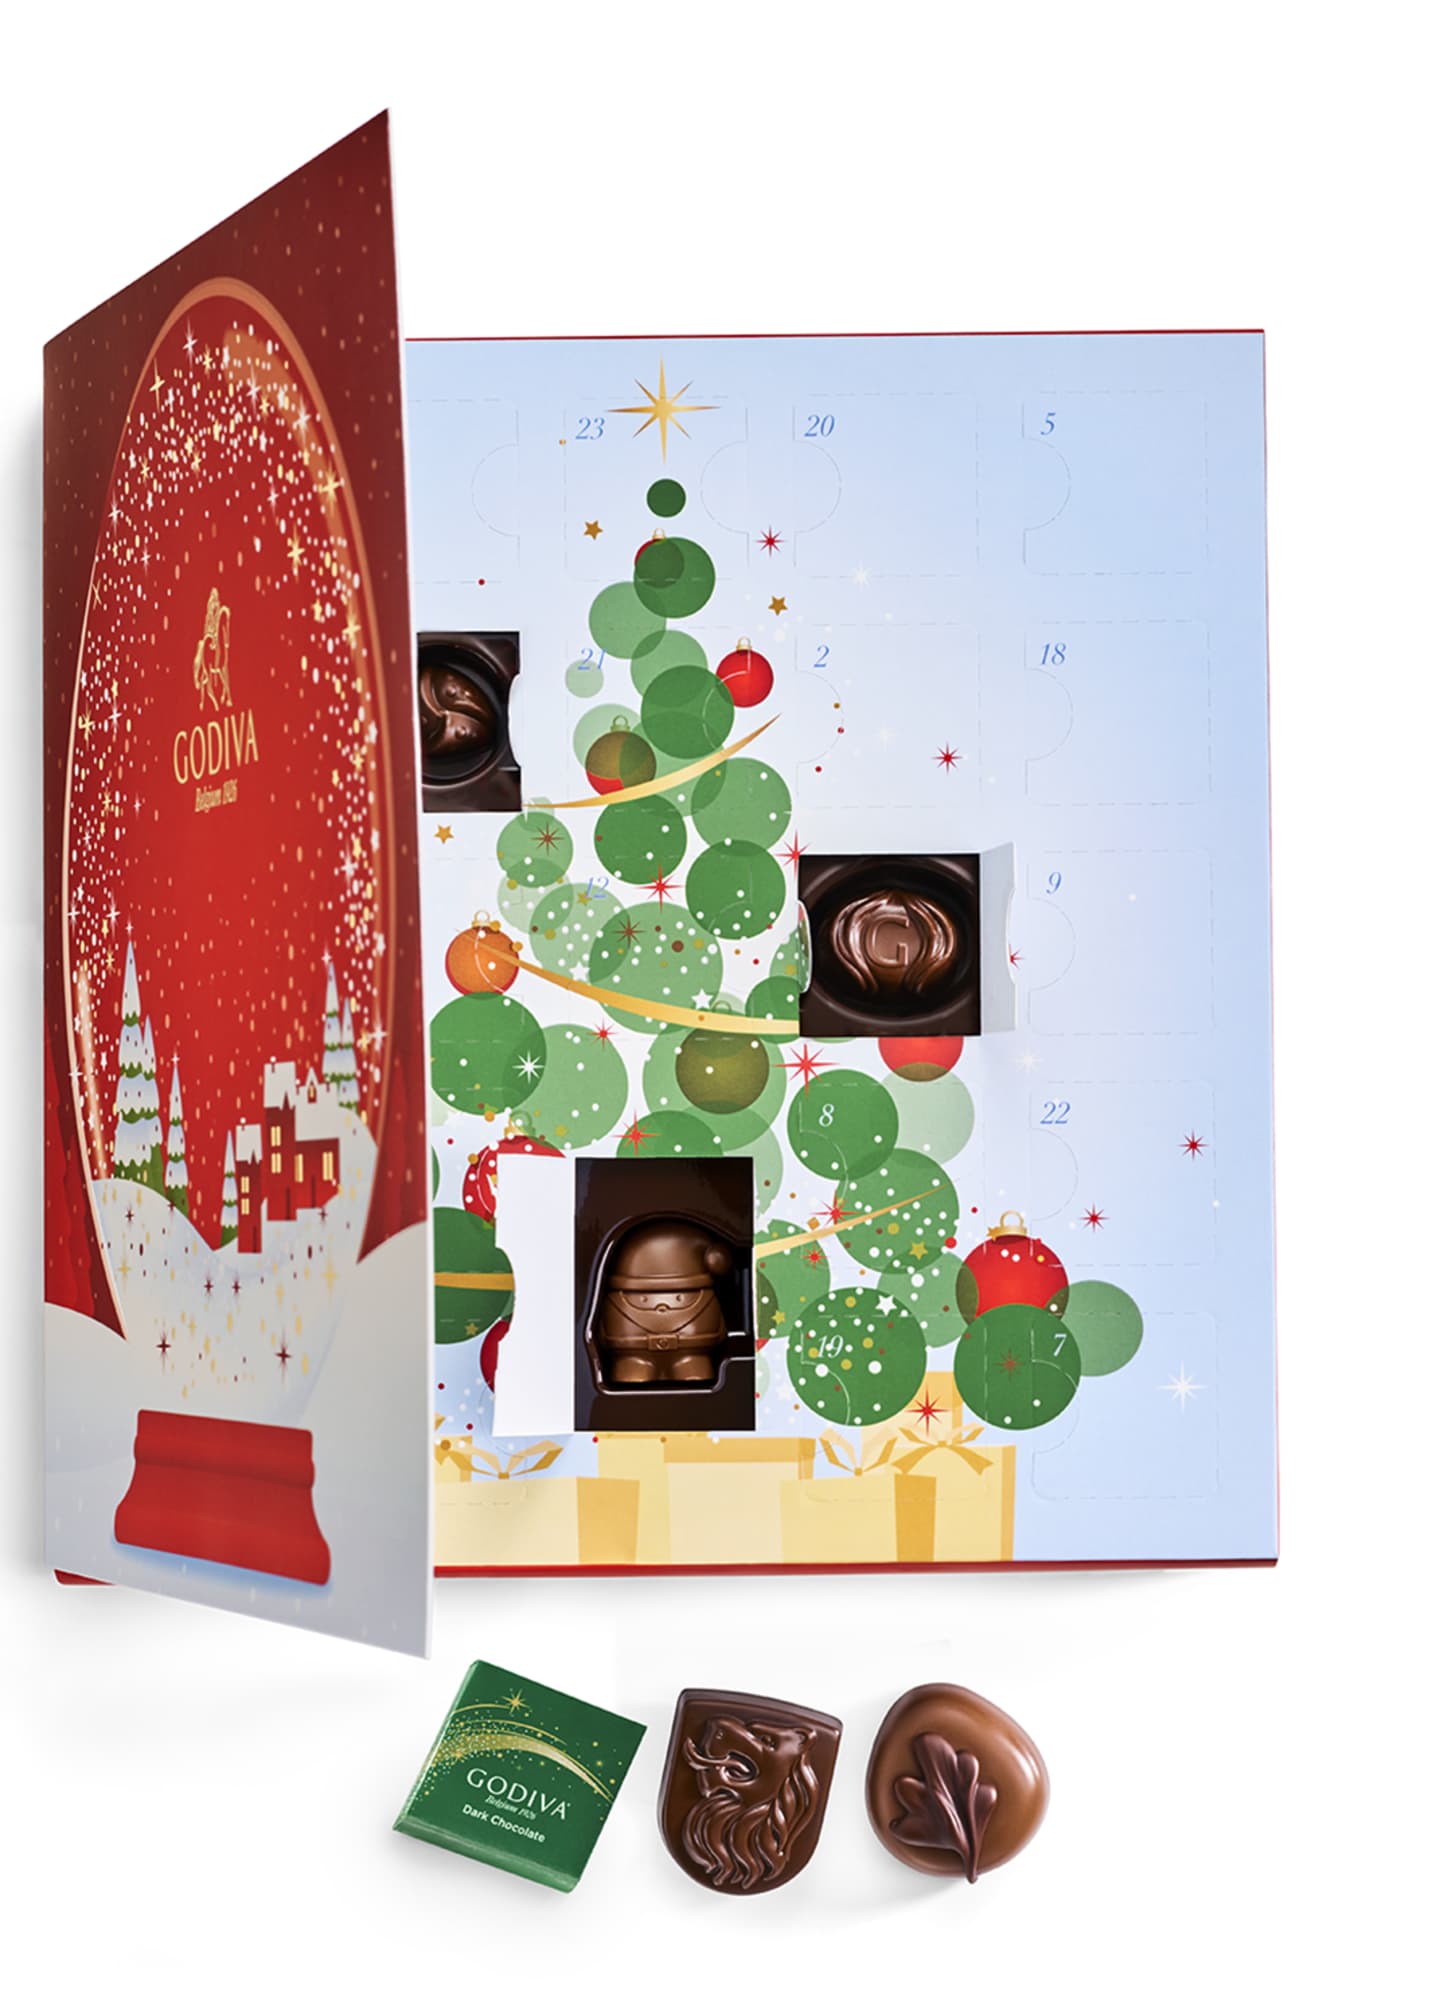 Godiva Chocolatier Holiday Advent Calendar Bergdorf Goodman